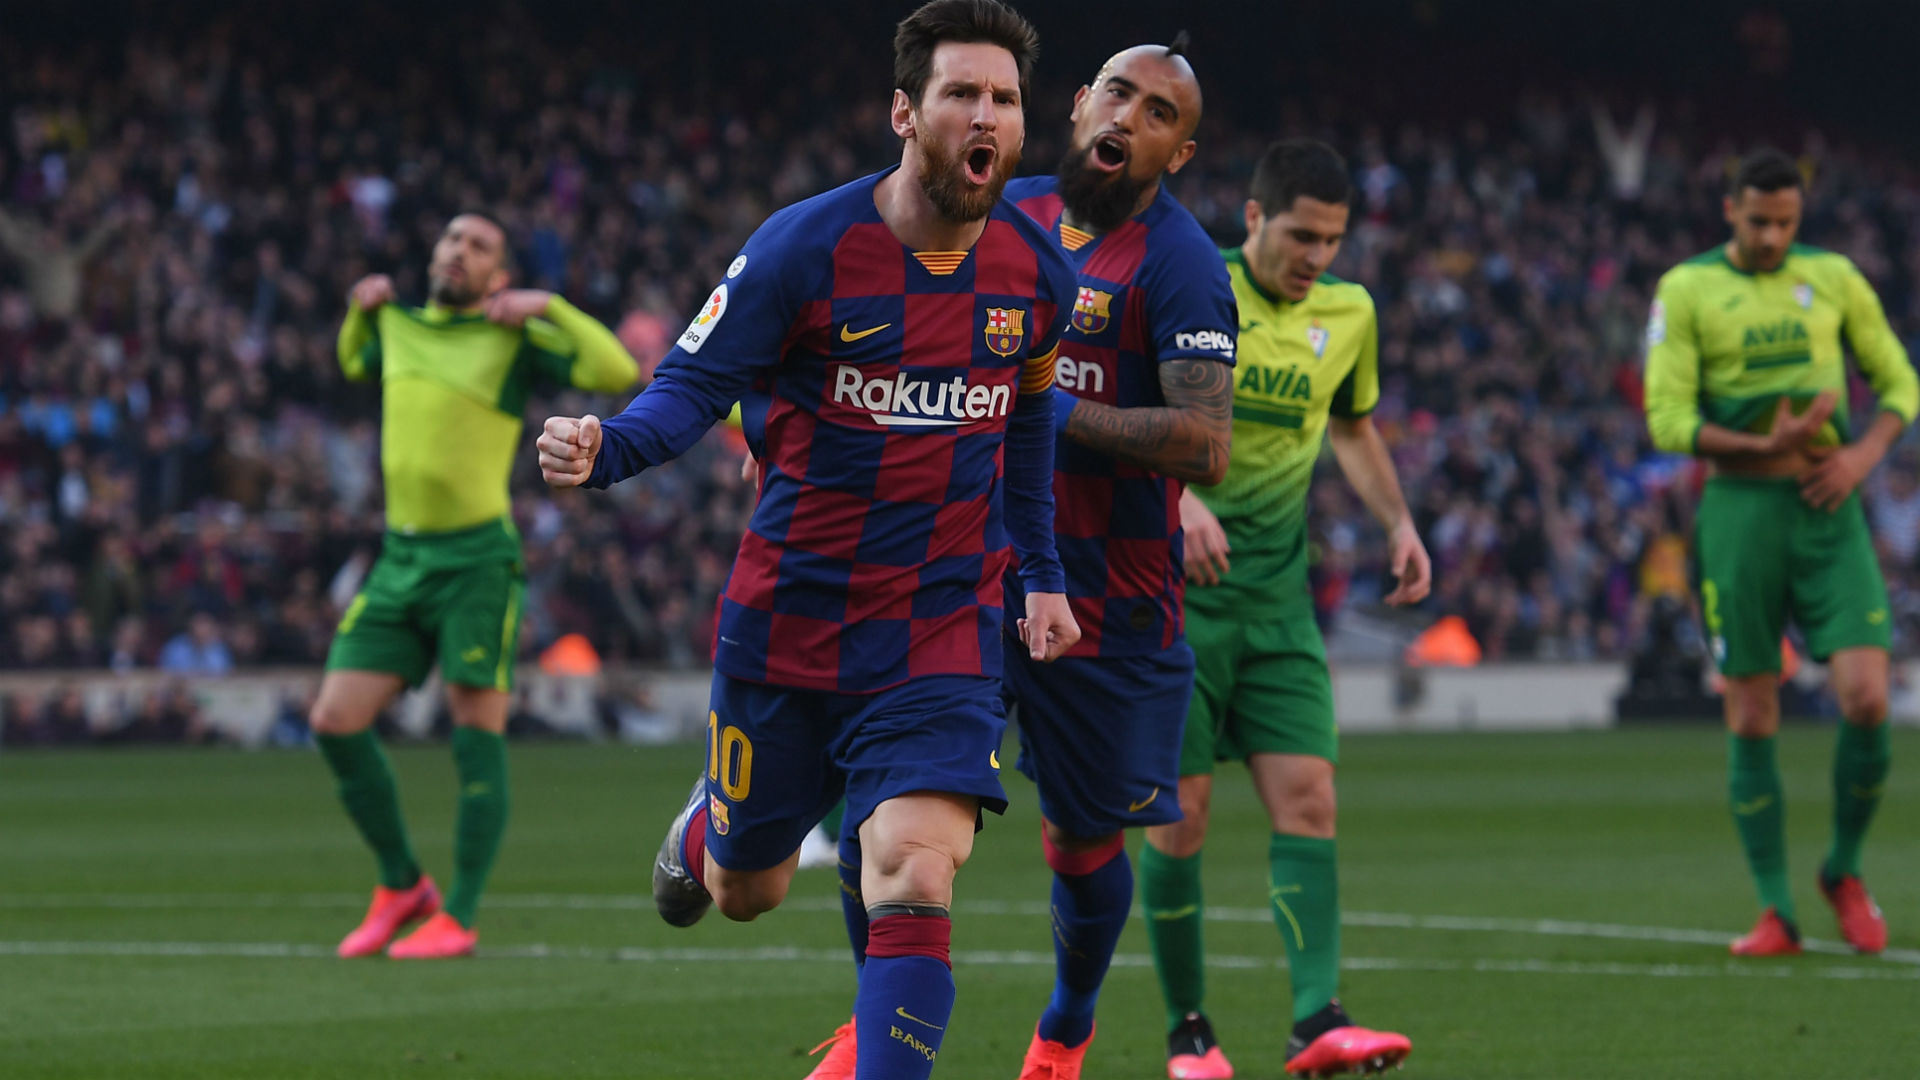 Barcelone-Eibar (5-0) - Un Messi de gala porte le Barça